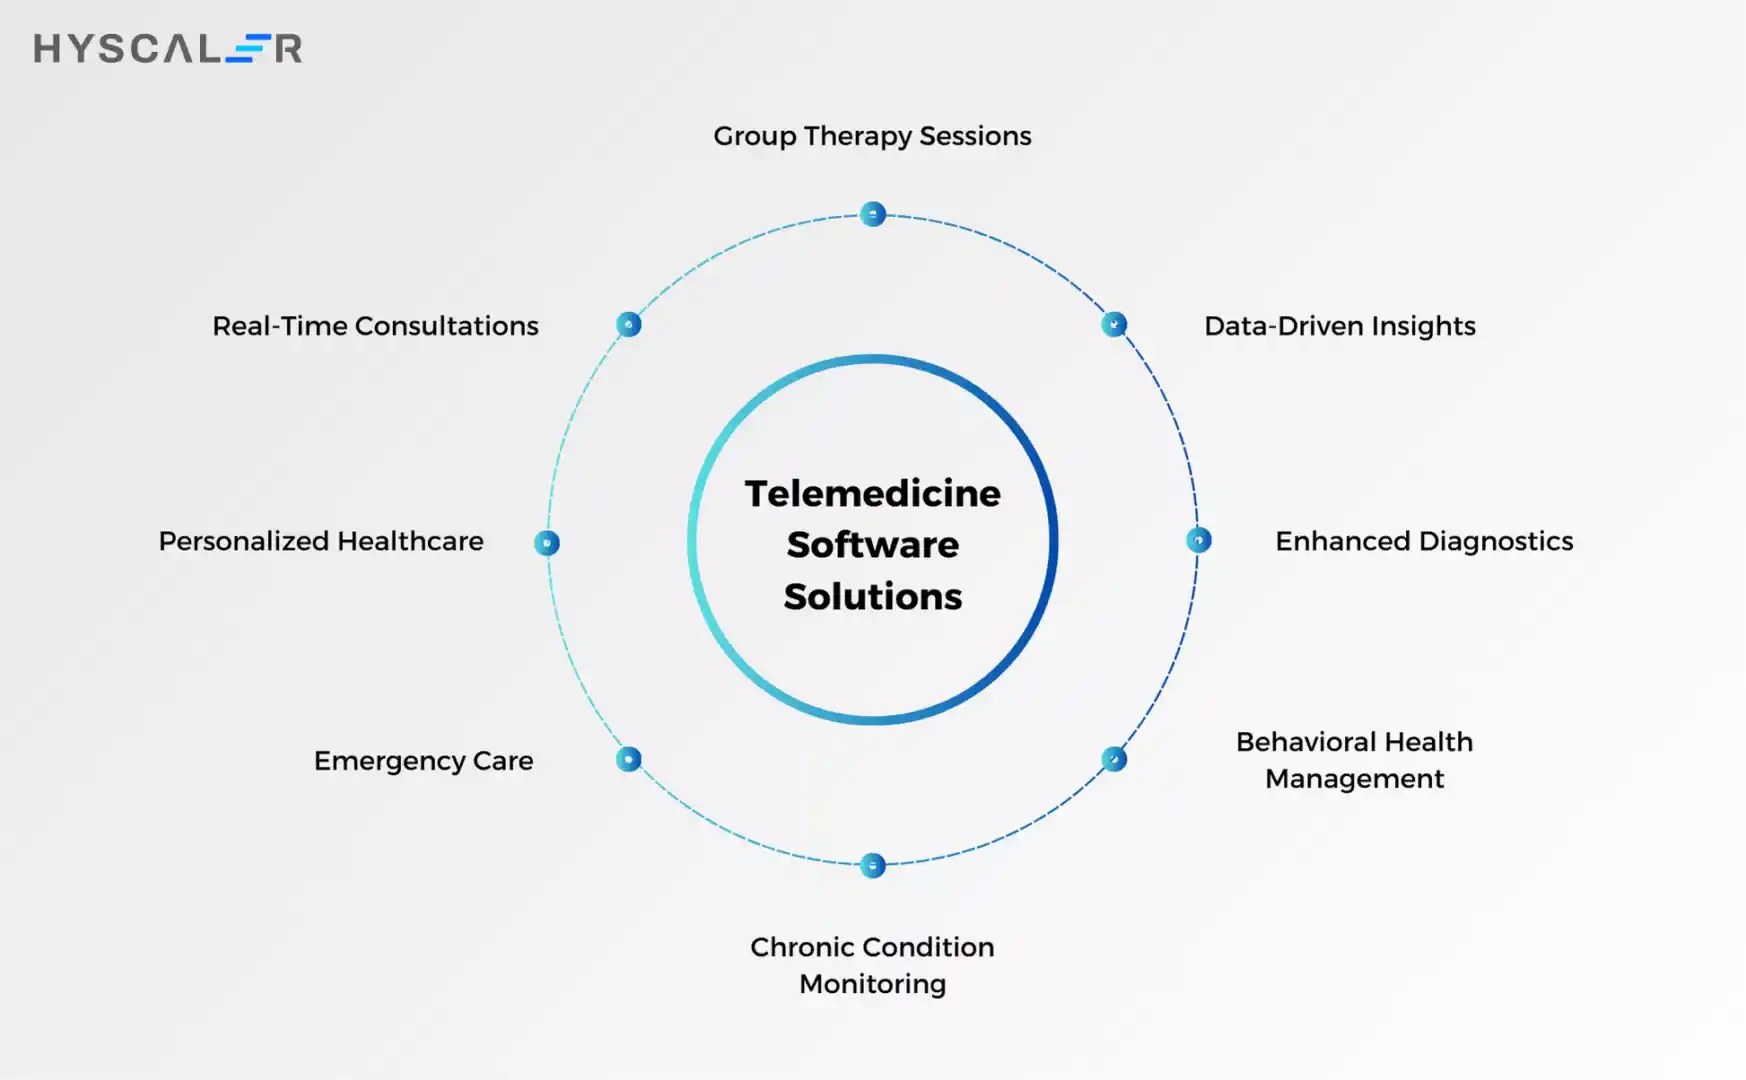 Telemedicine Software Solutions